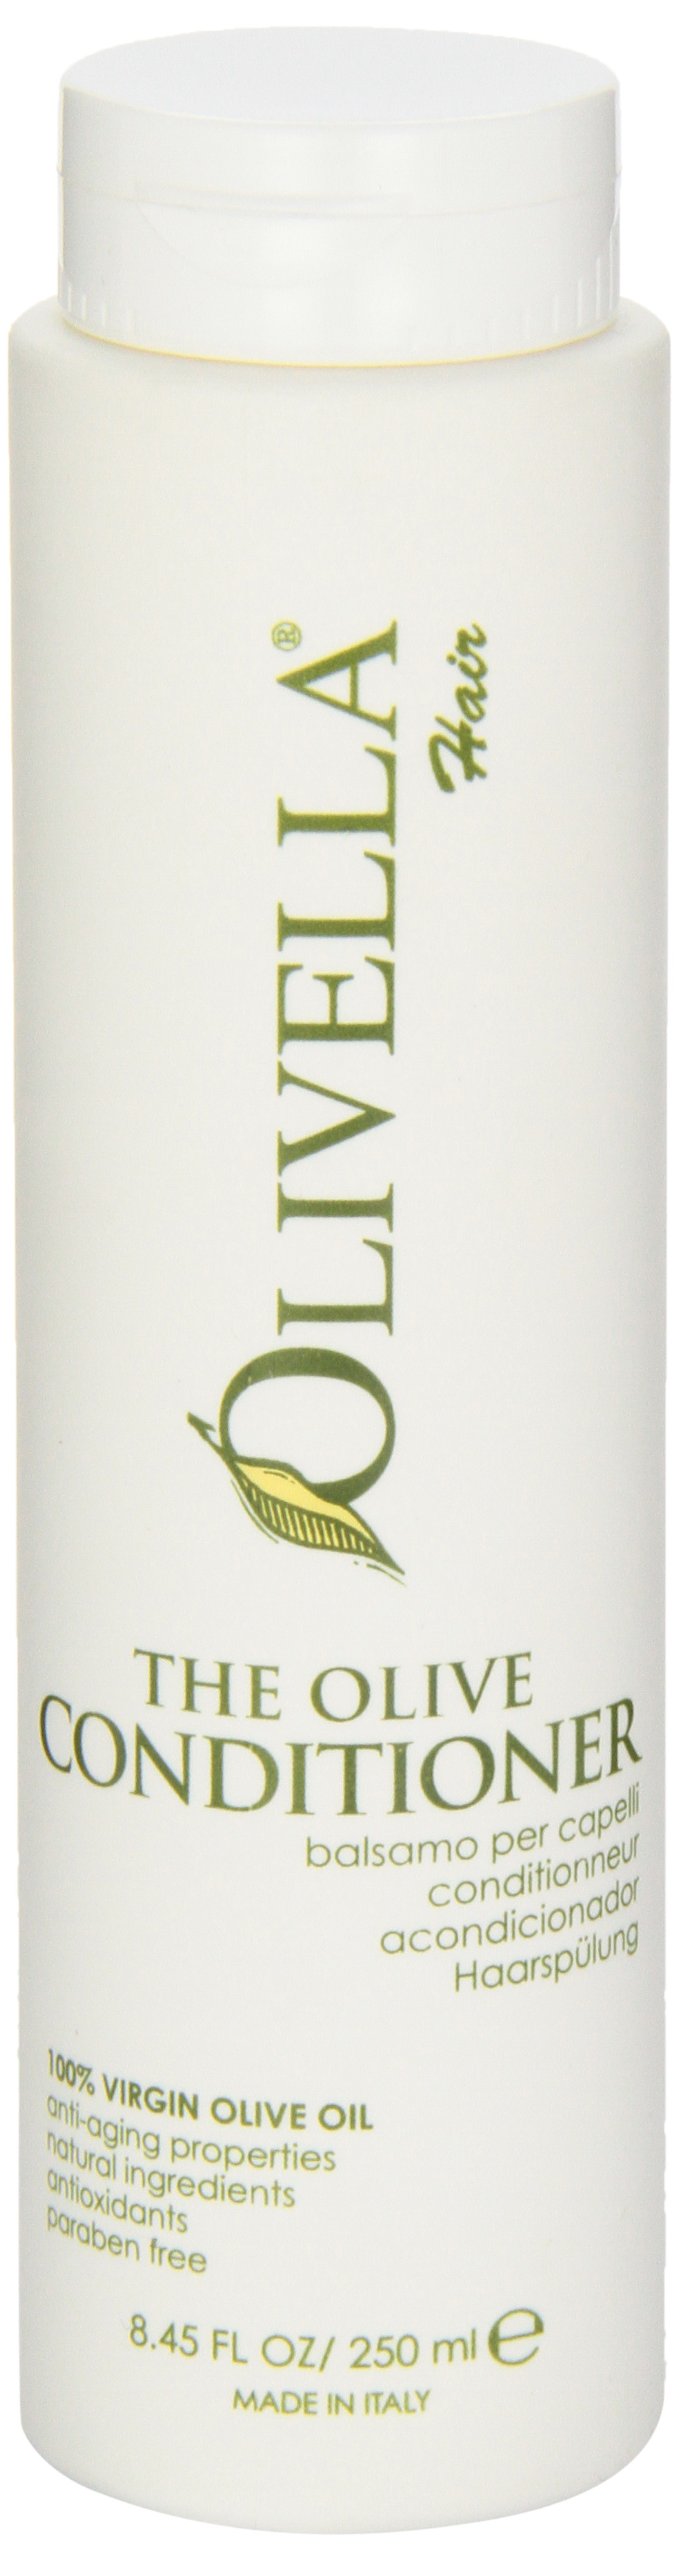 Olivella Hair The Olive Conditioner, 100% Virgin Olive Oil - 8.45 Oz, Oli-9025